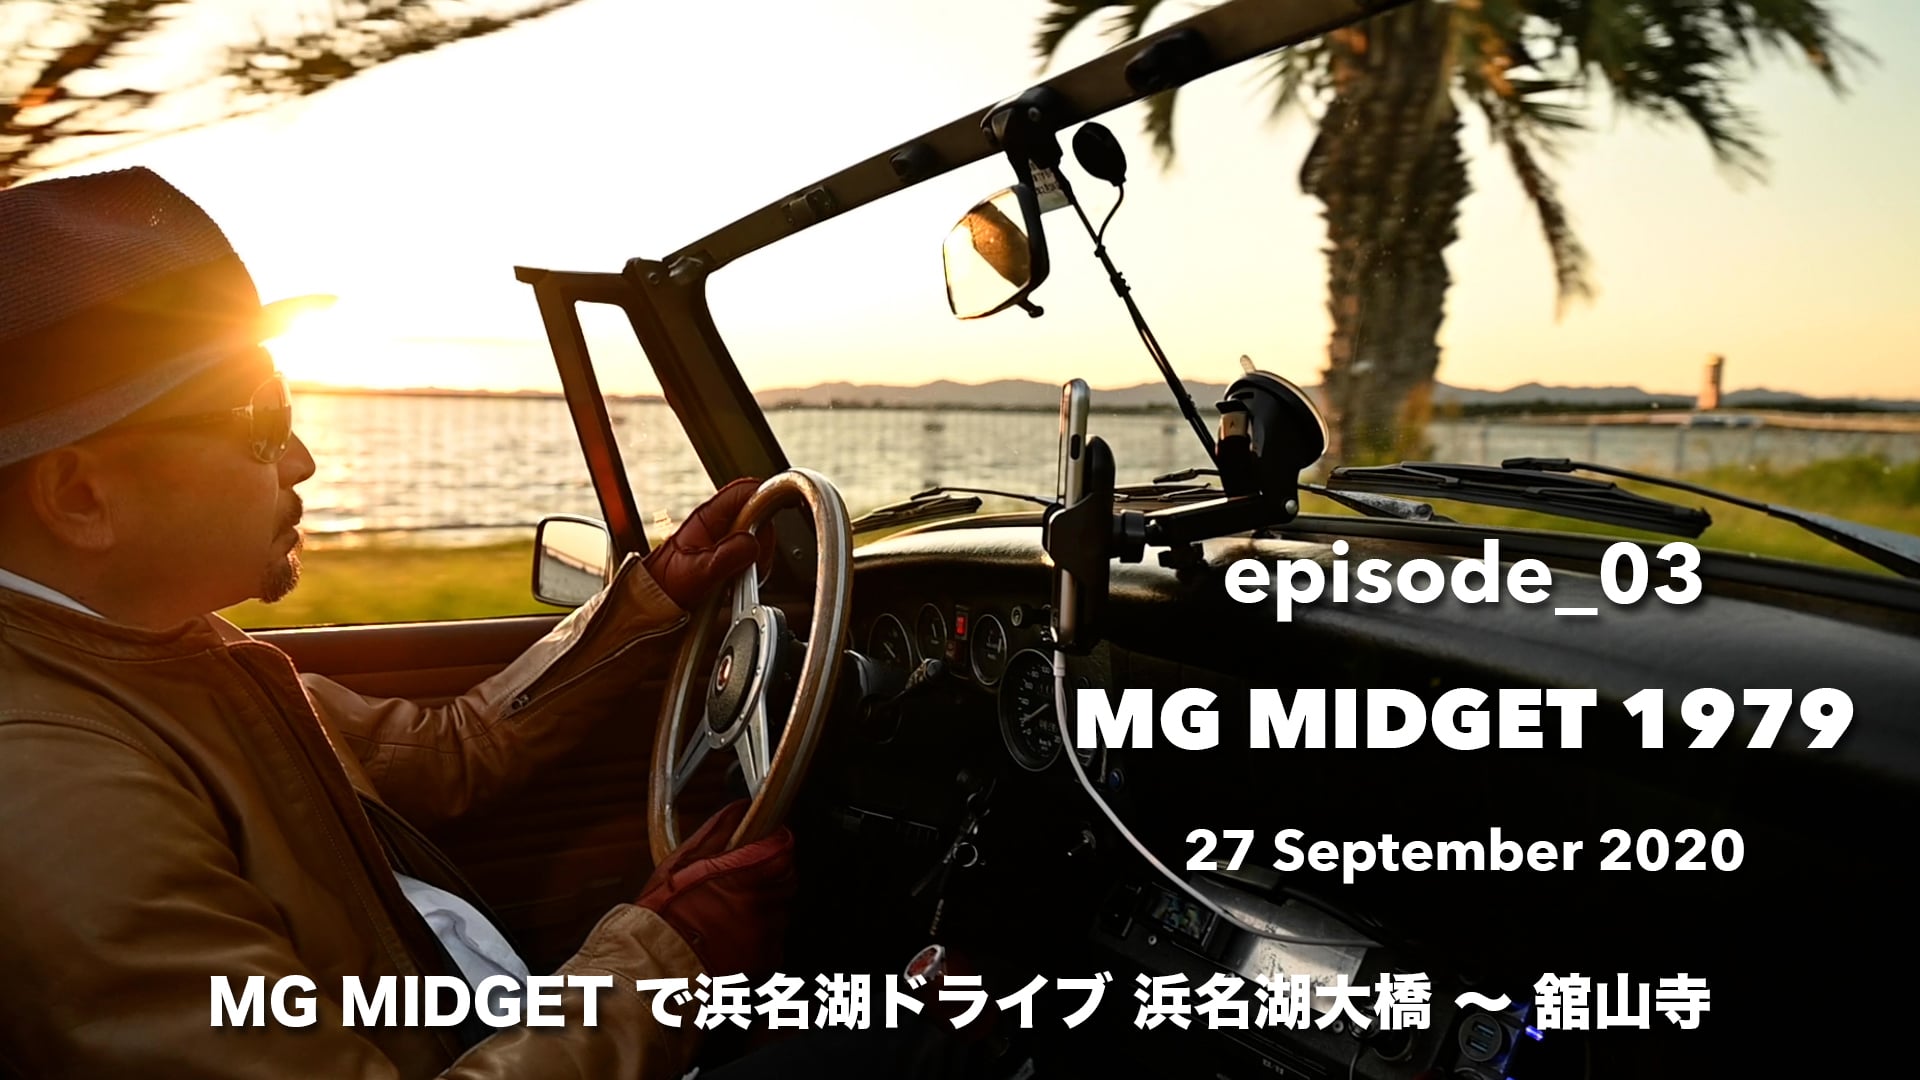 MG MIDGET 1979 (episode_03) 夕陽の浜名湖ドライブ！ 浜名湖大橋〜舘山寺 編